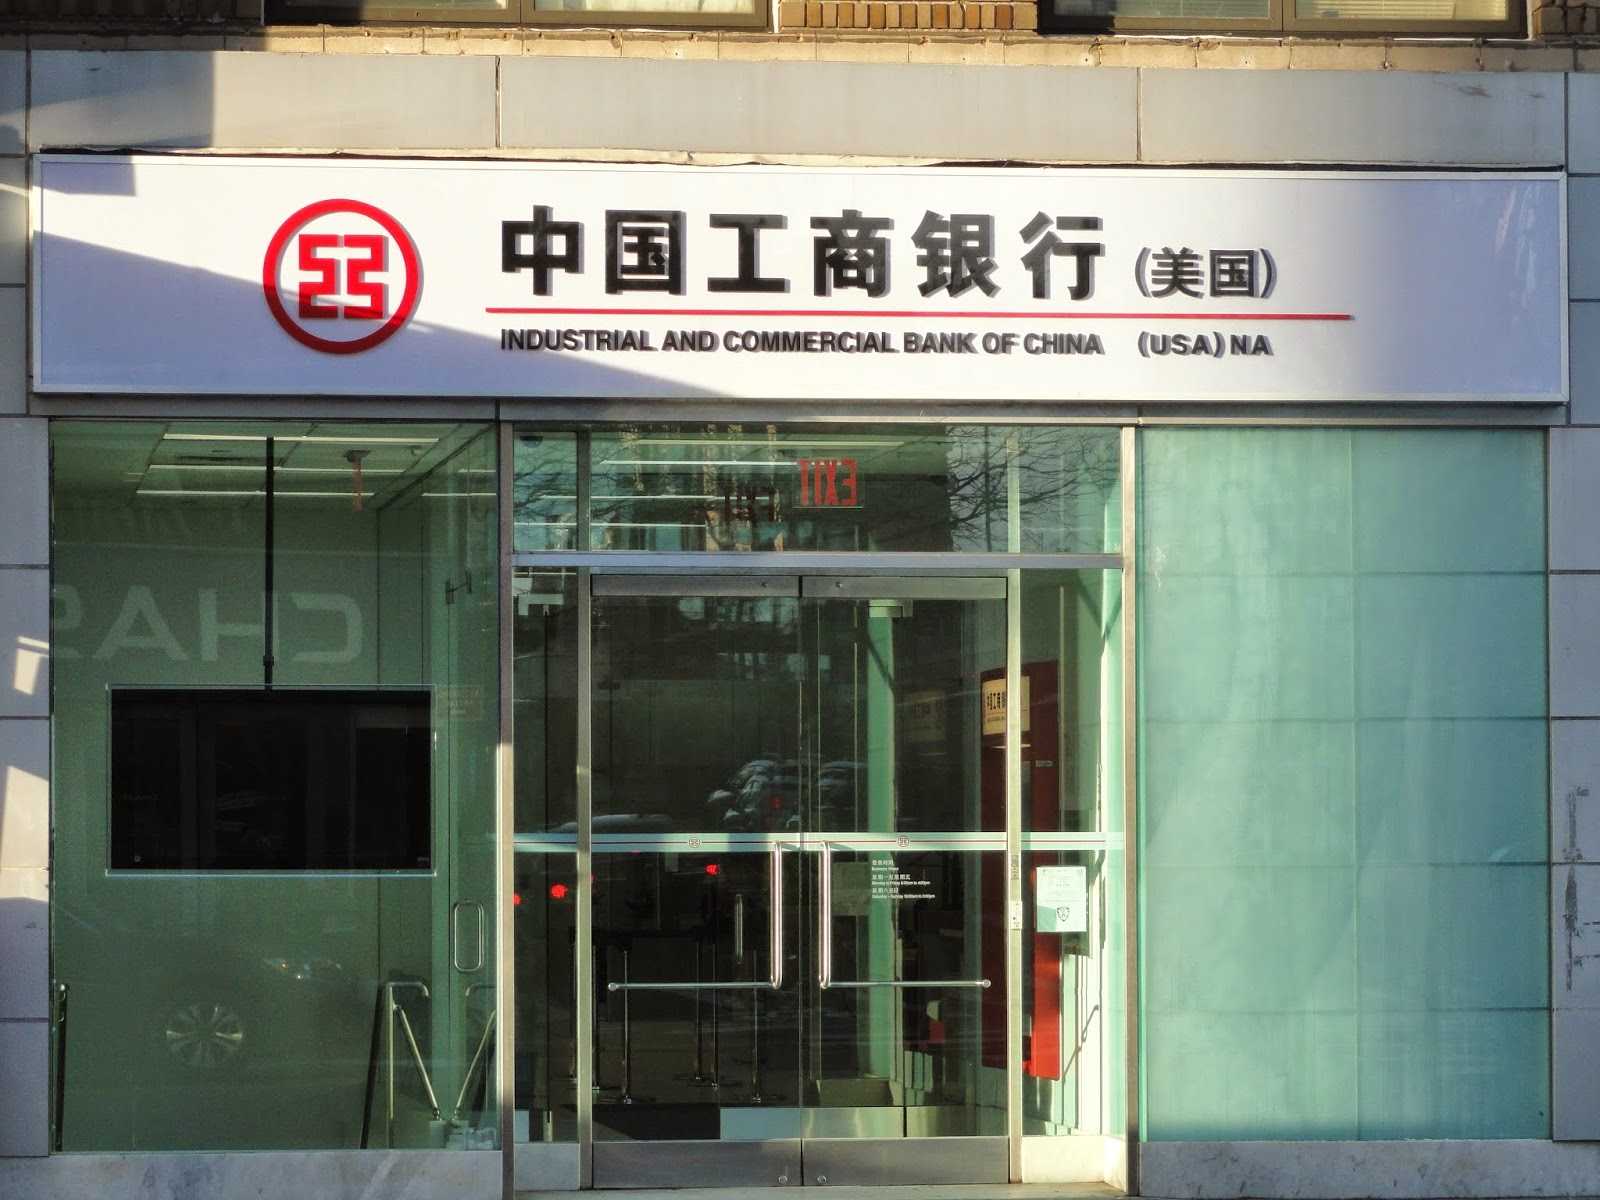 Heihe rural commercial bank. Банк Китая. Bank of China в Москве. Банк Китая (Bank of China). Торгово-промышленный банк Китая.